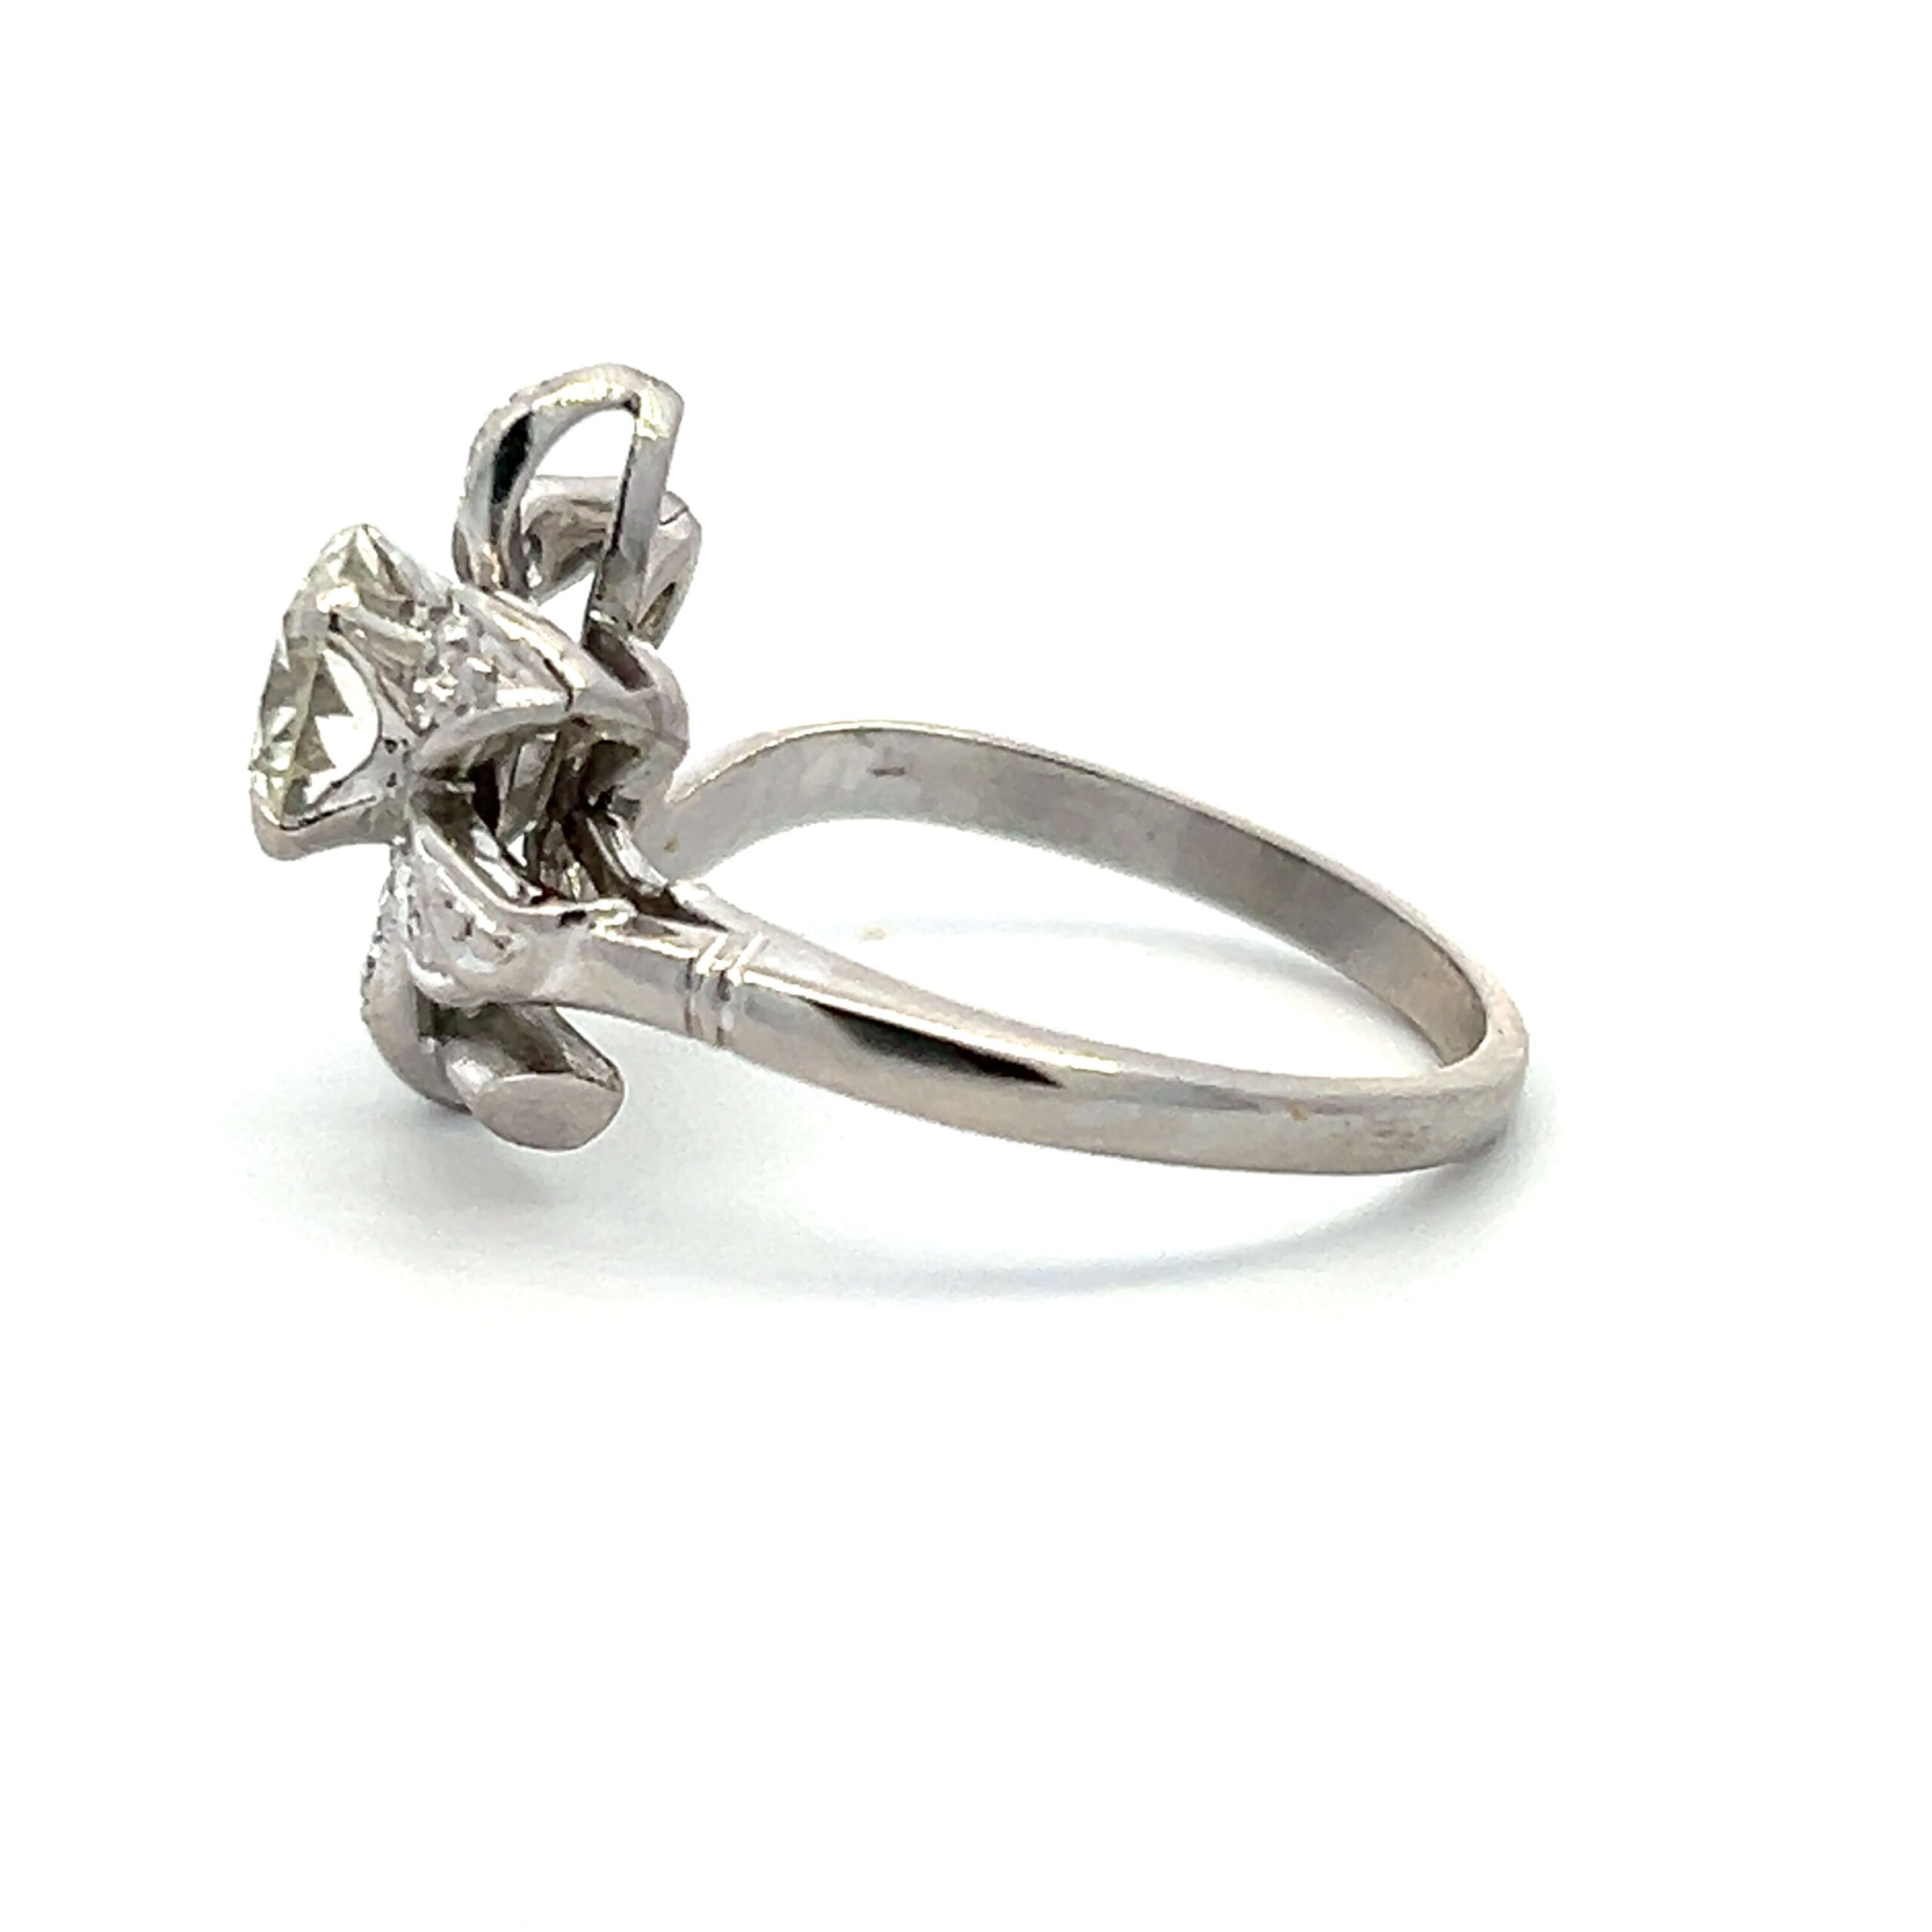 One estate vintage platinum floral motif ring with 1.32 carats of round brilliant diamonds